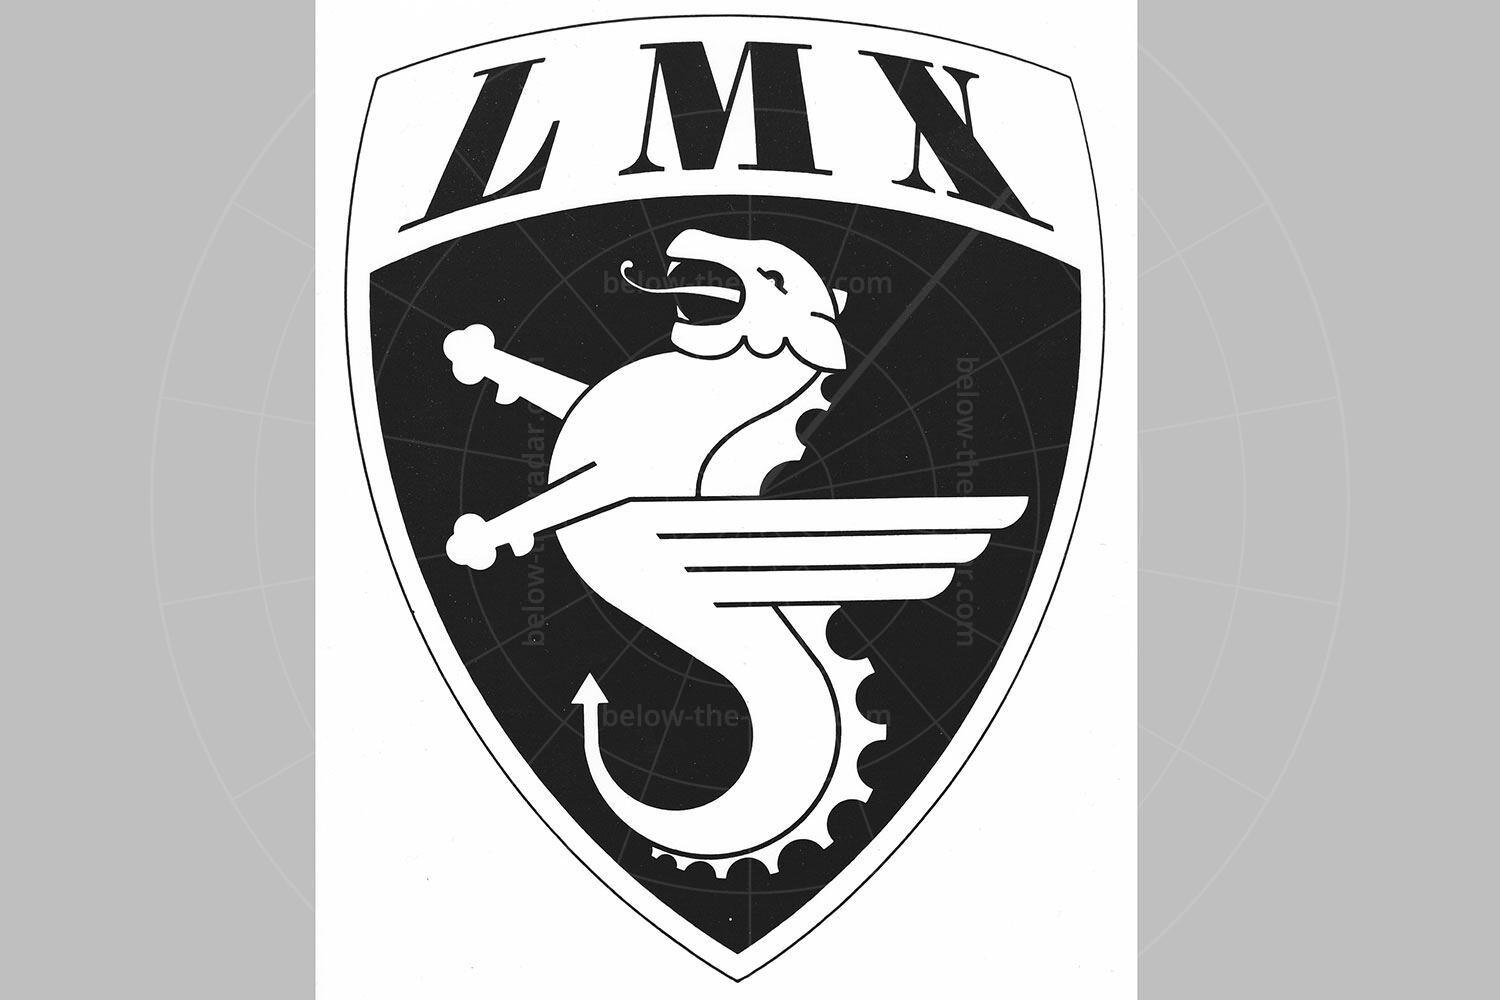 The LMX logo Pic: Richard Heseltine | 